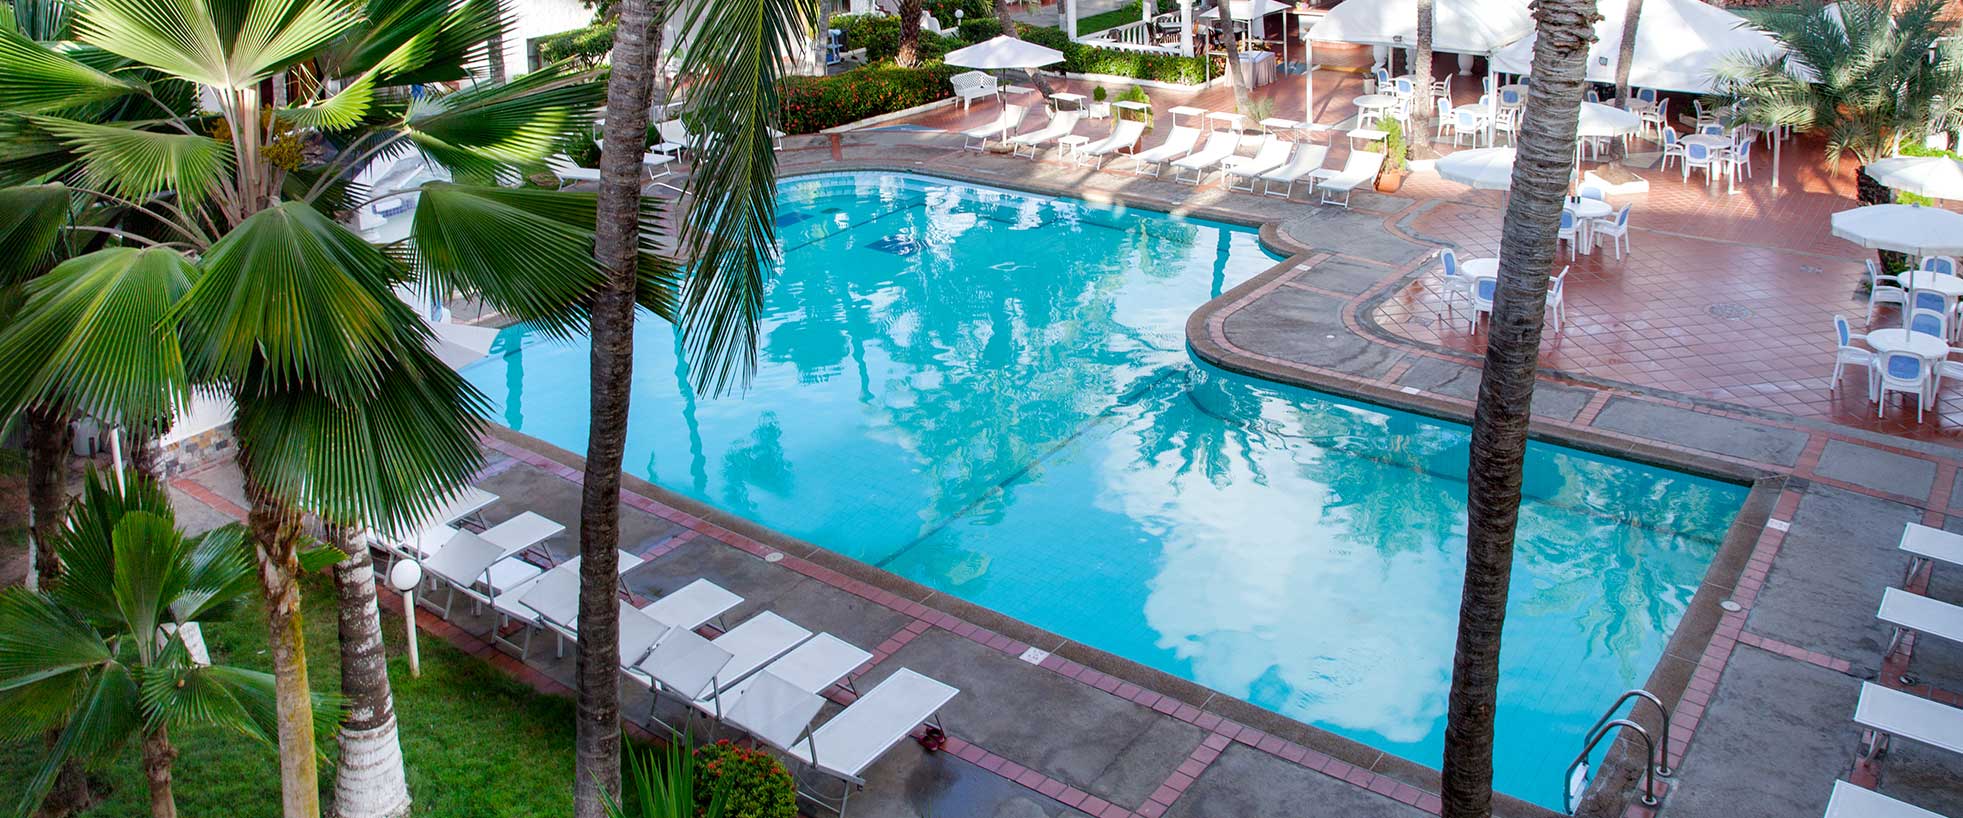 On Vacation - Isla Margarita - Hotel LD Flamboyant